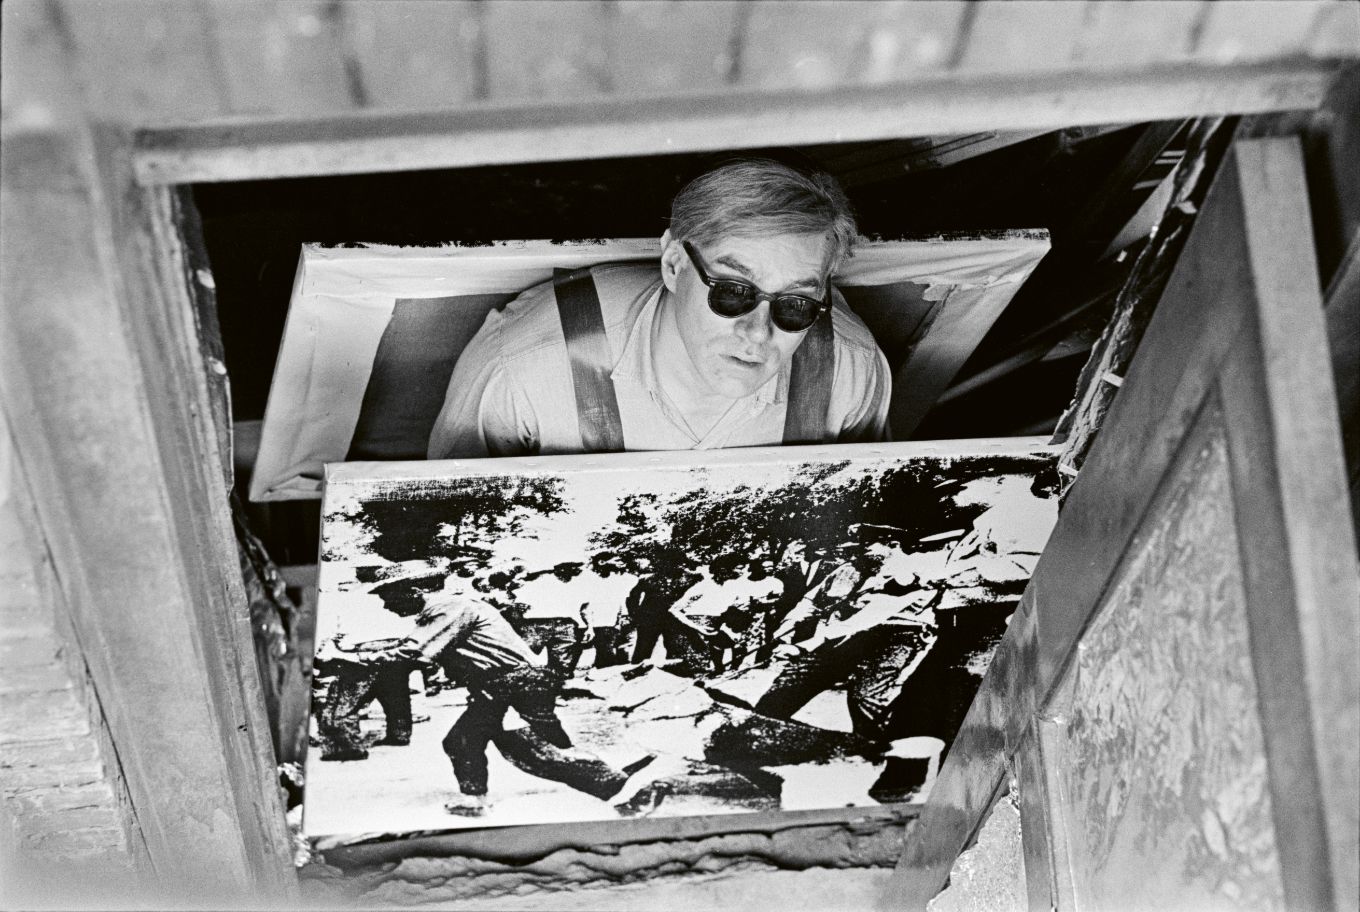 Homage to Warhol’s Birmingham Race Riot